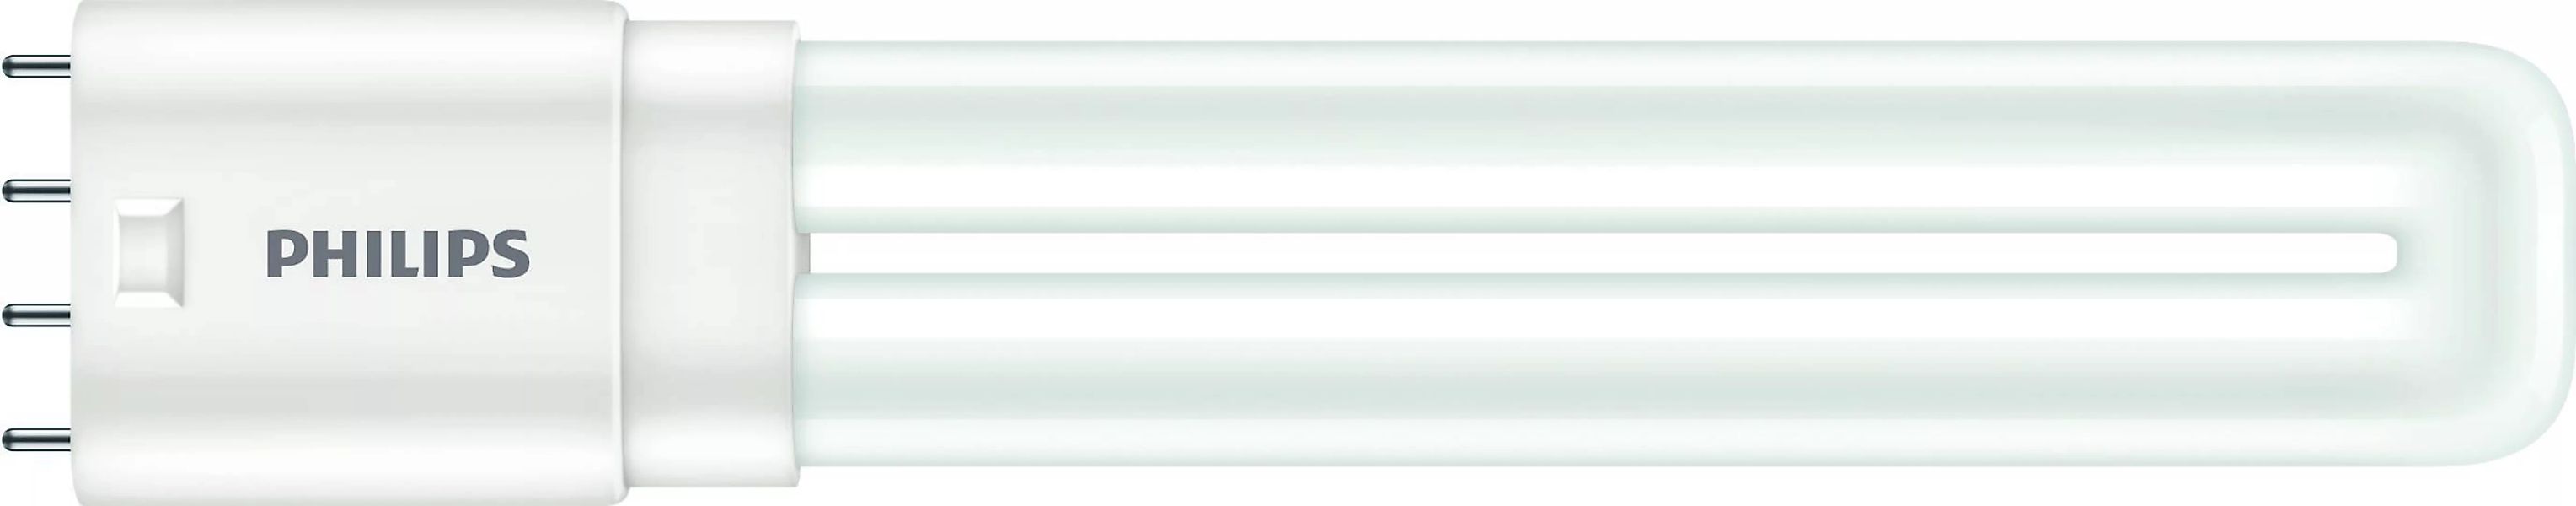 Philips Lighting LED-Kompaktlampe f. EVG 2G11, 830 CoreLEDPLL #48676800 günstig online kaufen